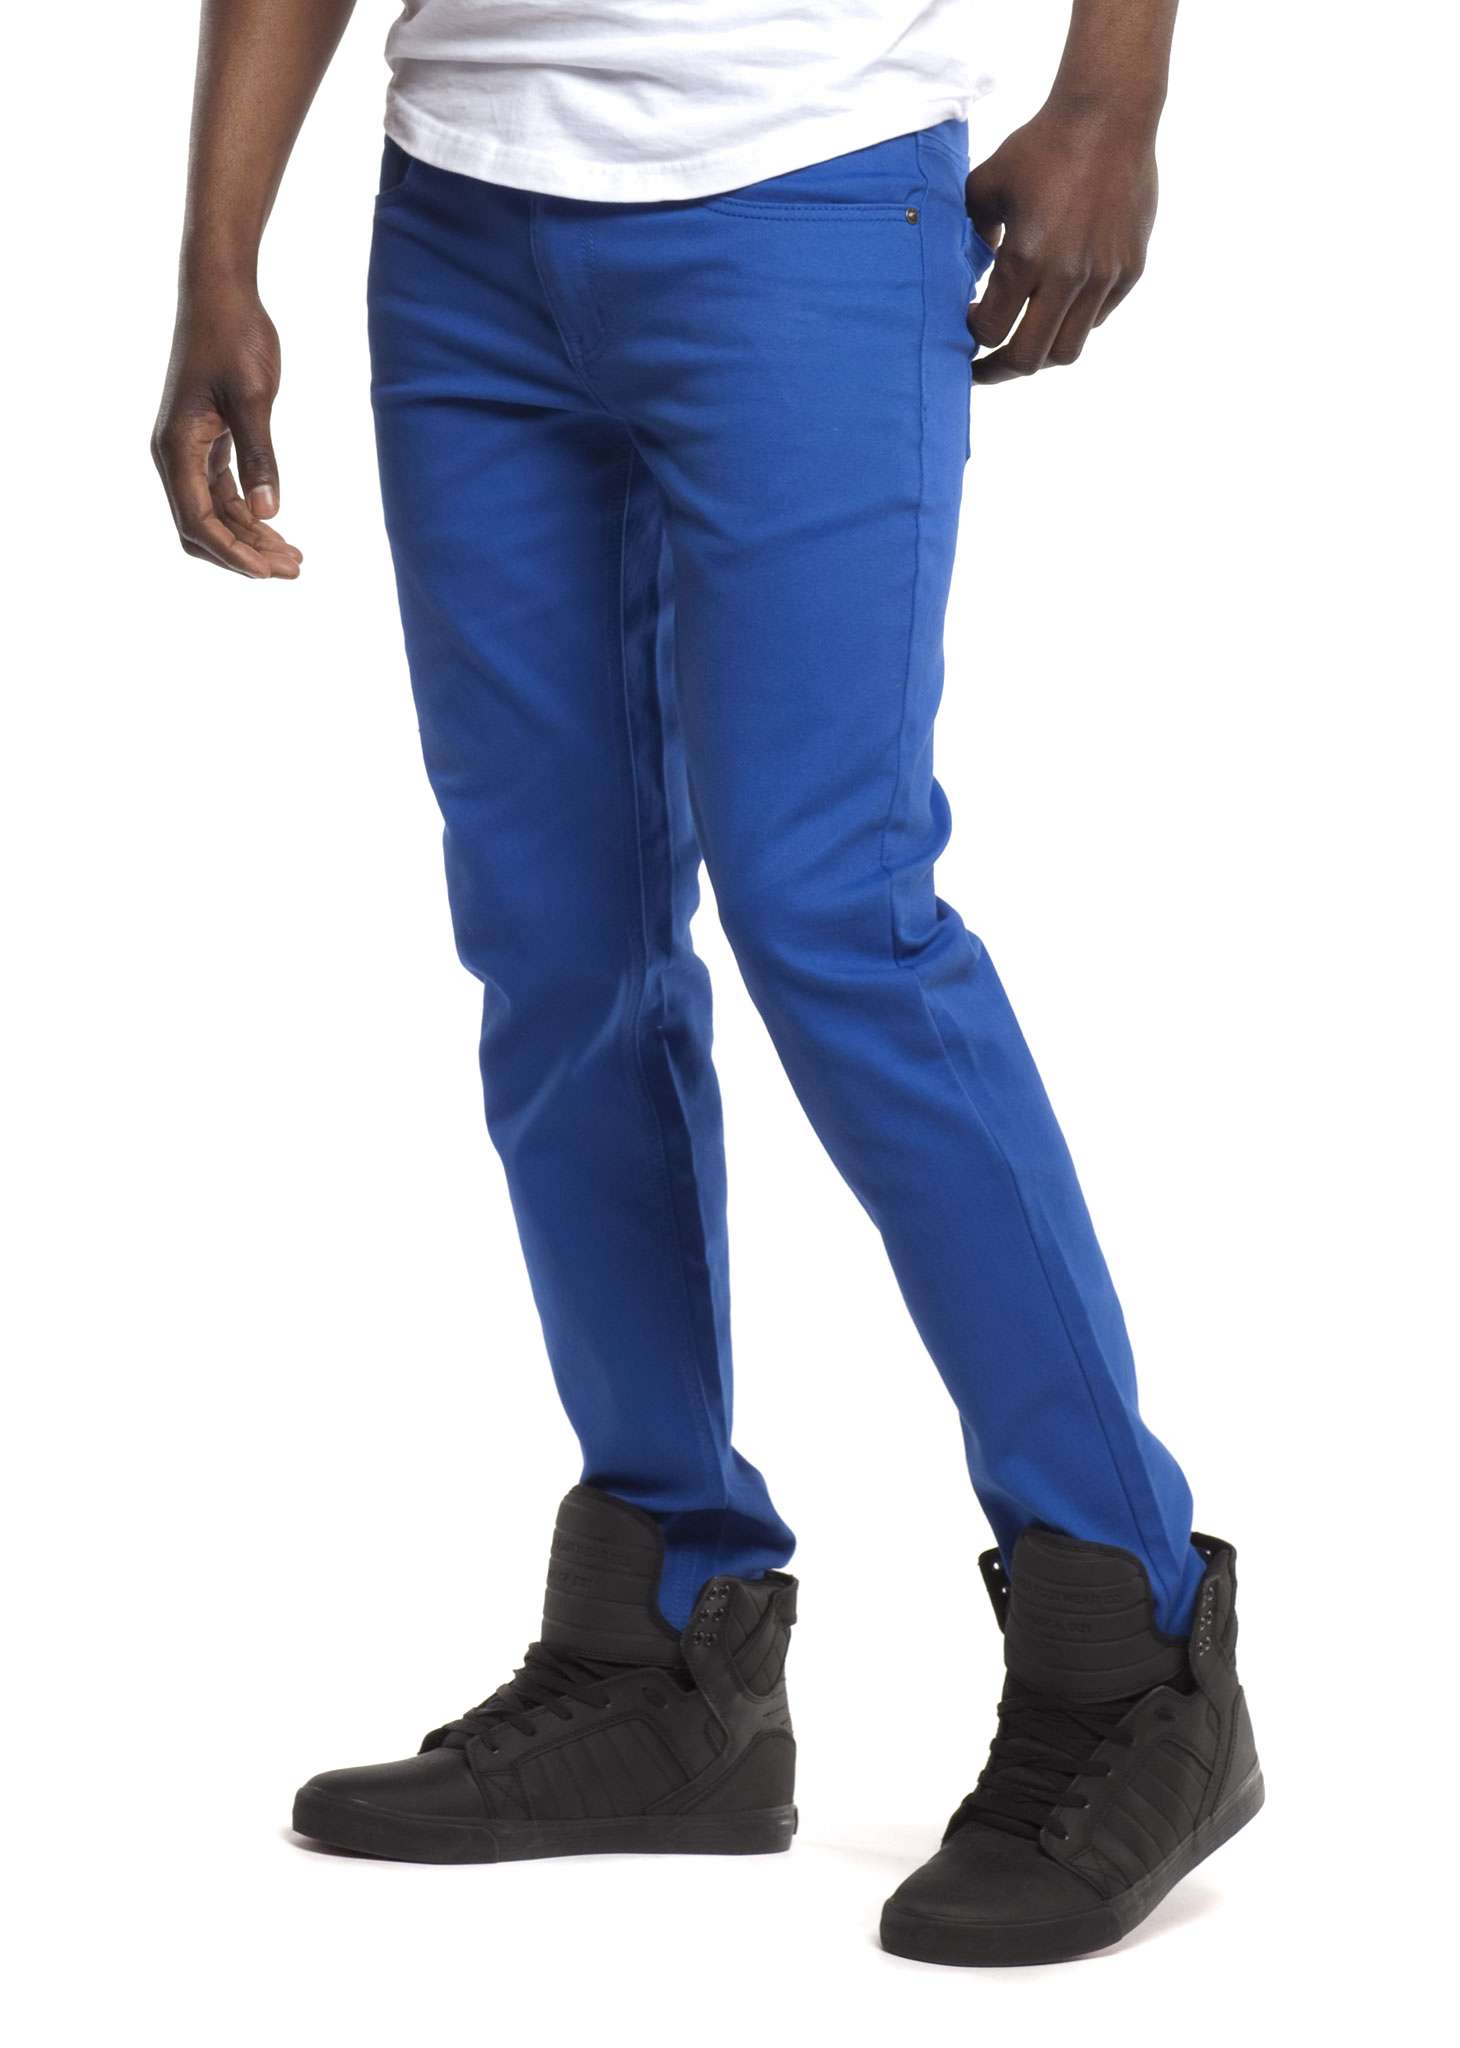 Royal Blue Men's Colored Skinny Stretch Twill Jean Pant | eBay